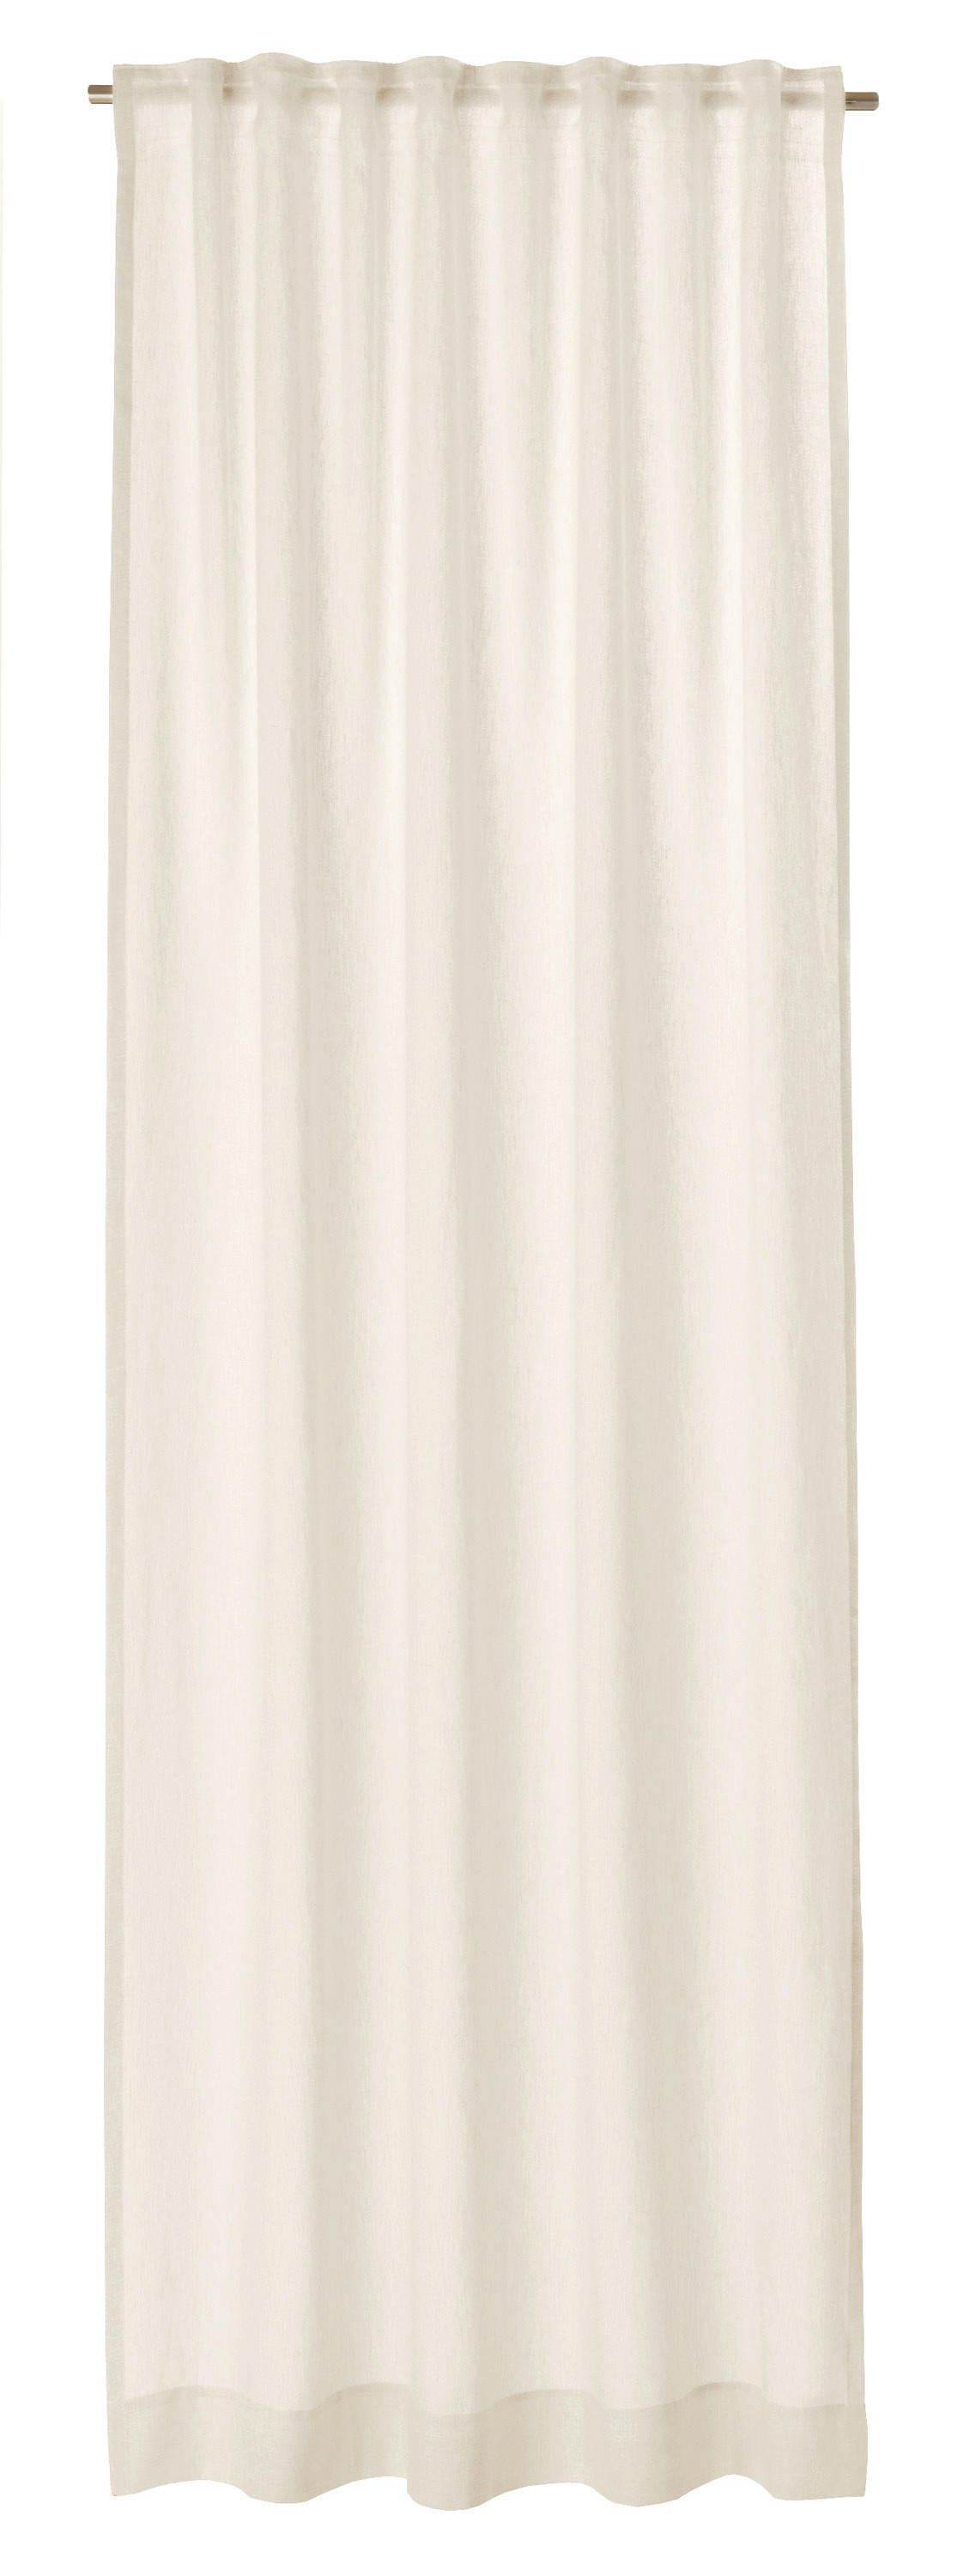 FERTIGVORHANG SW-Breeze halbtransparent 125/250 cm   - Creme, Basics, Textil (125/250cm) - Schöner Wohnen